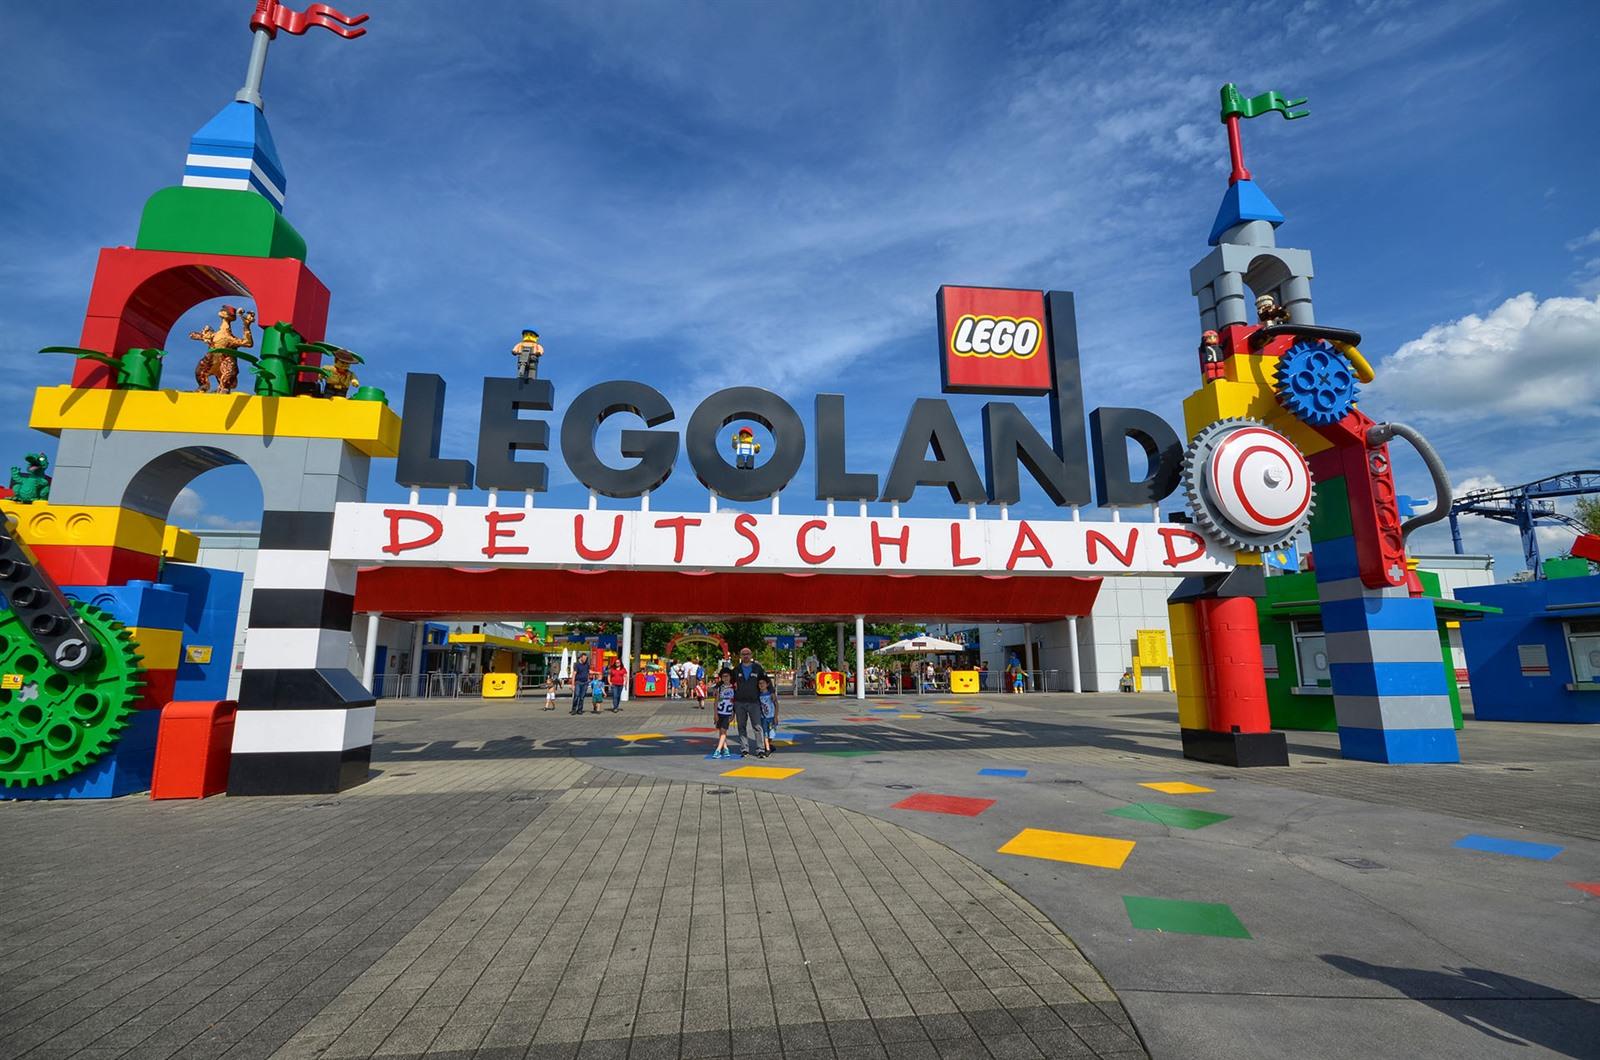 ga sightseeing Kalksteen Vervallen Legoland Duitsland bezoeken (Günzburg)? Alle info, tips & tickets